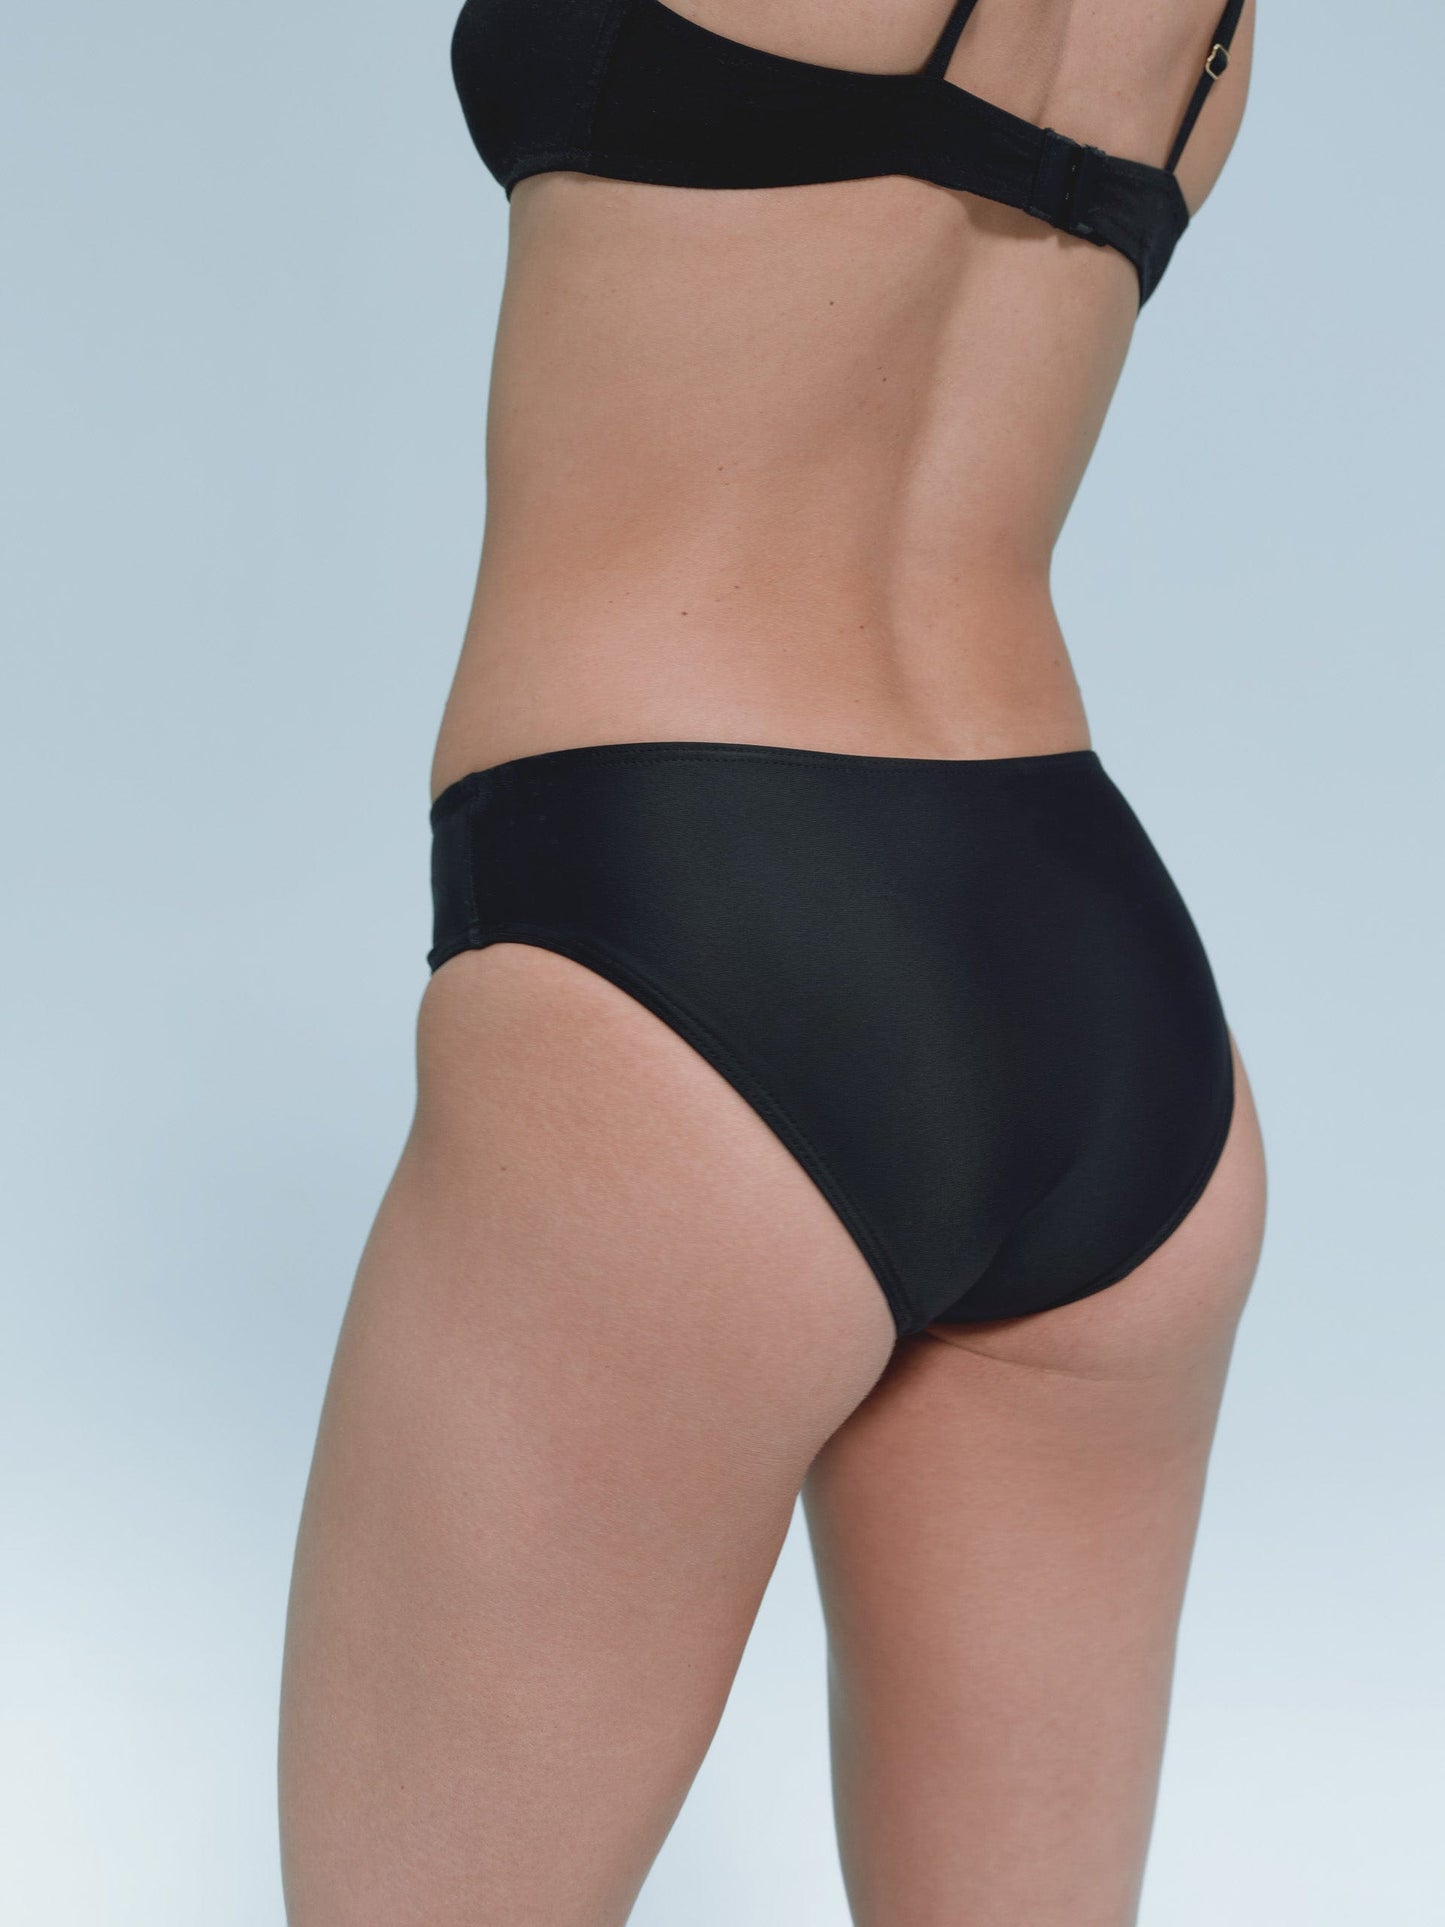 Period swimwear - Bikini - Recycled Nylon - Black